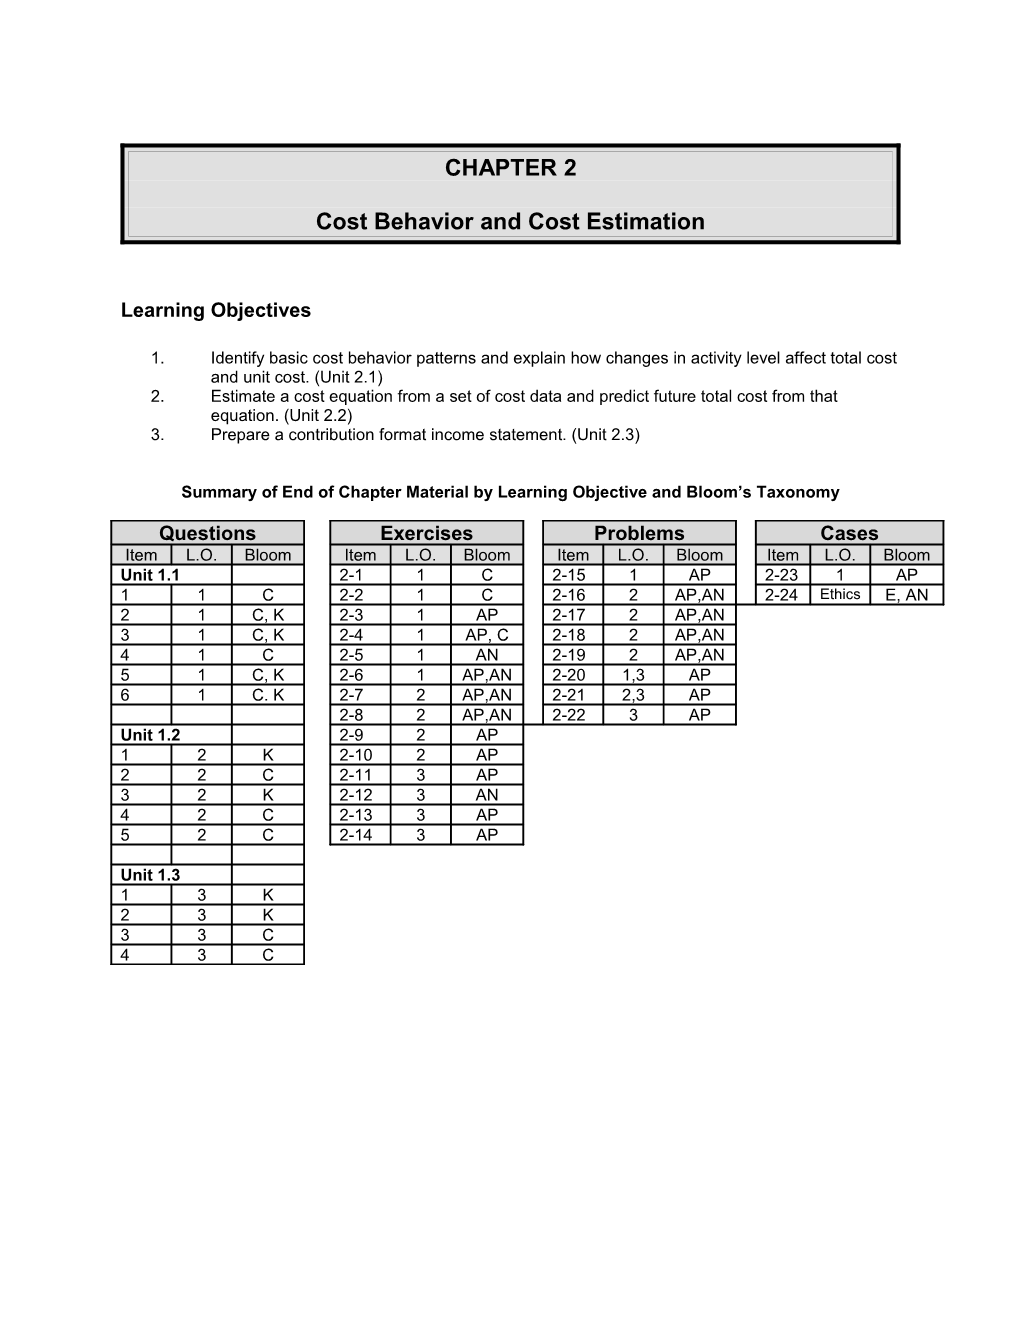 Cost Behavior and Cost Estimation